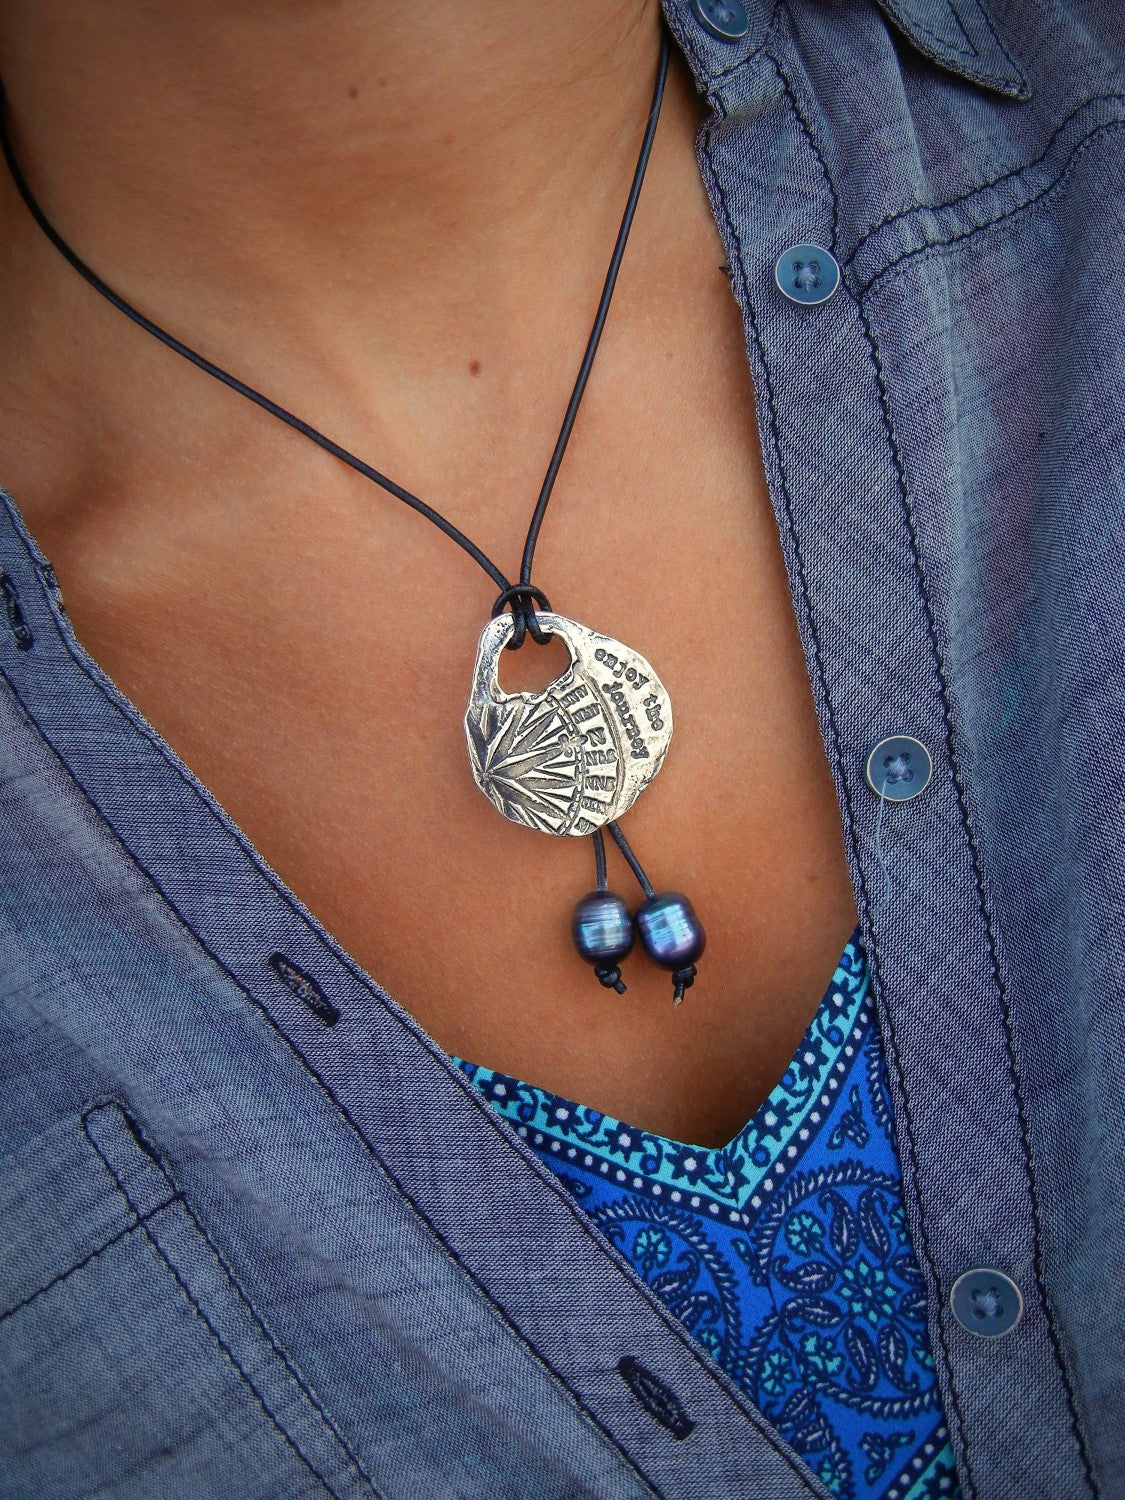 Enjoy the Journey Inspirational Necklace - HappyGoLicky Jewelry